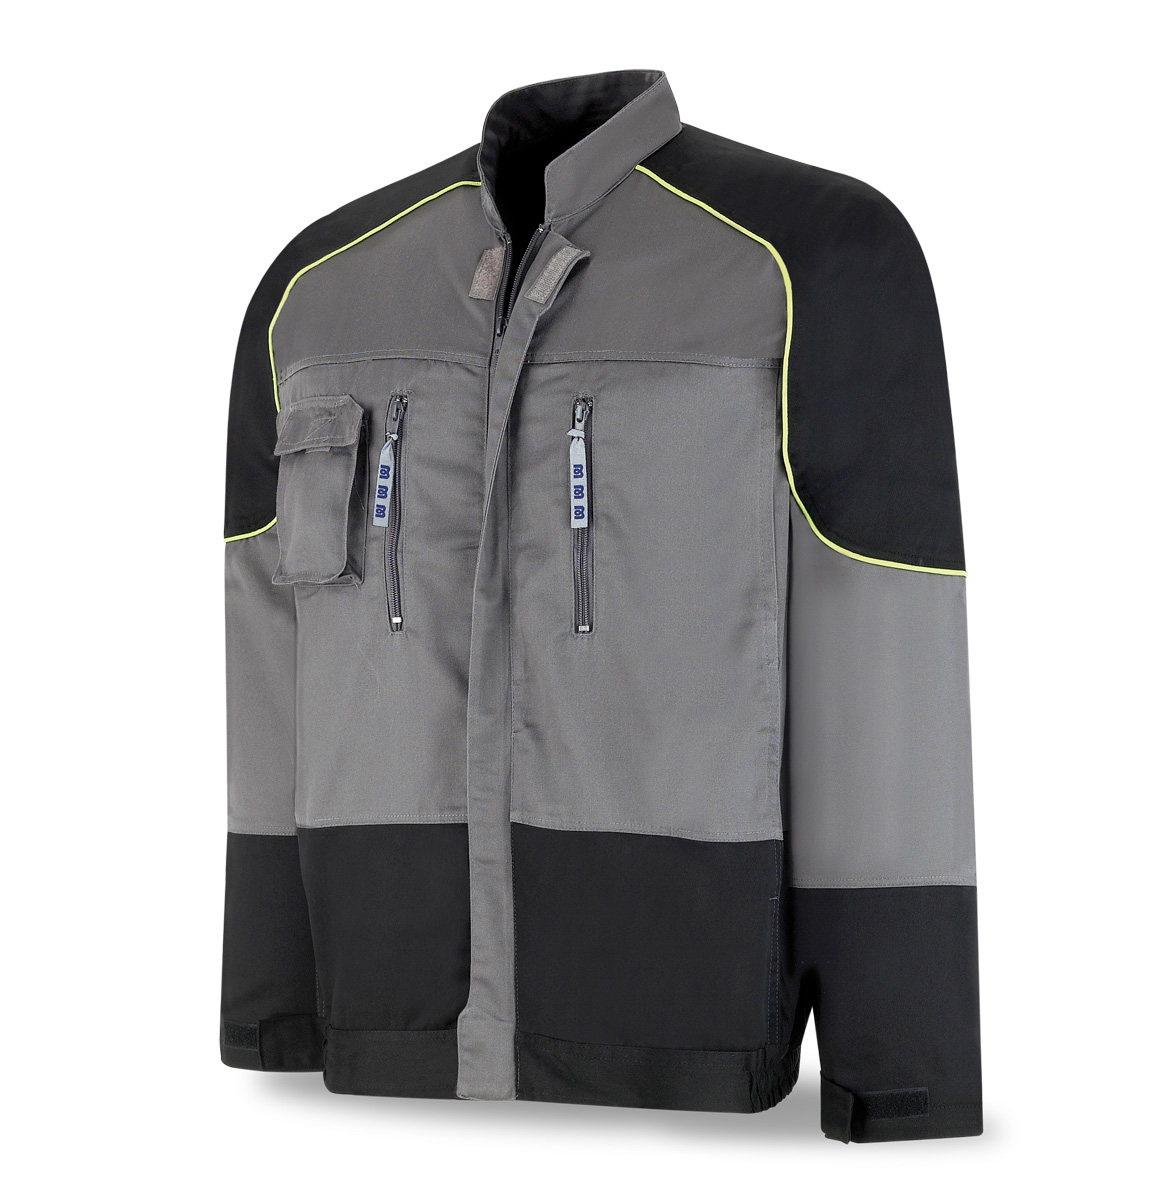 588-CGN Workwear Pro Series 245gr. Tergal jacket. Dark grey/Black.